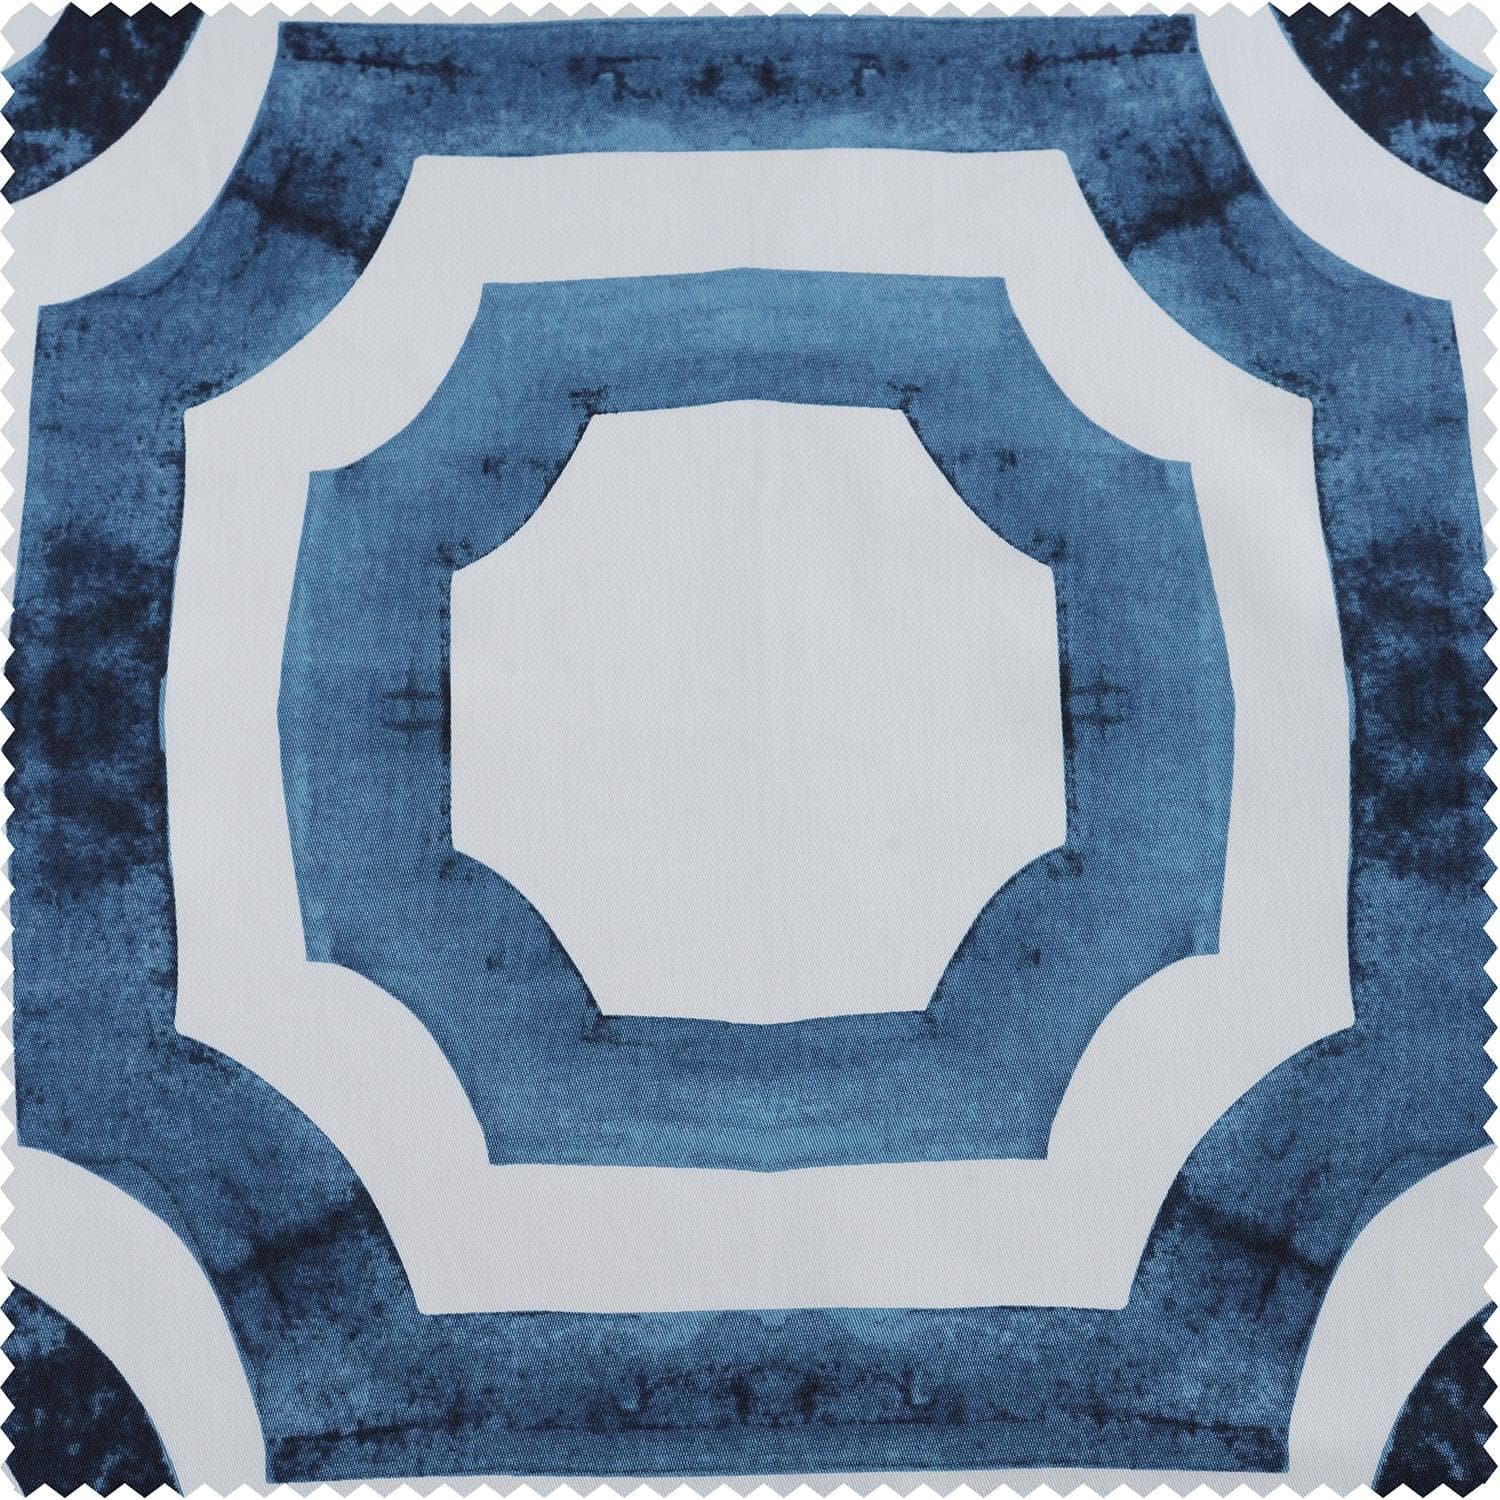 Mecca Blue Emblem Printed Cotton Cushion Covers - Pair